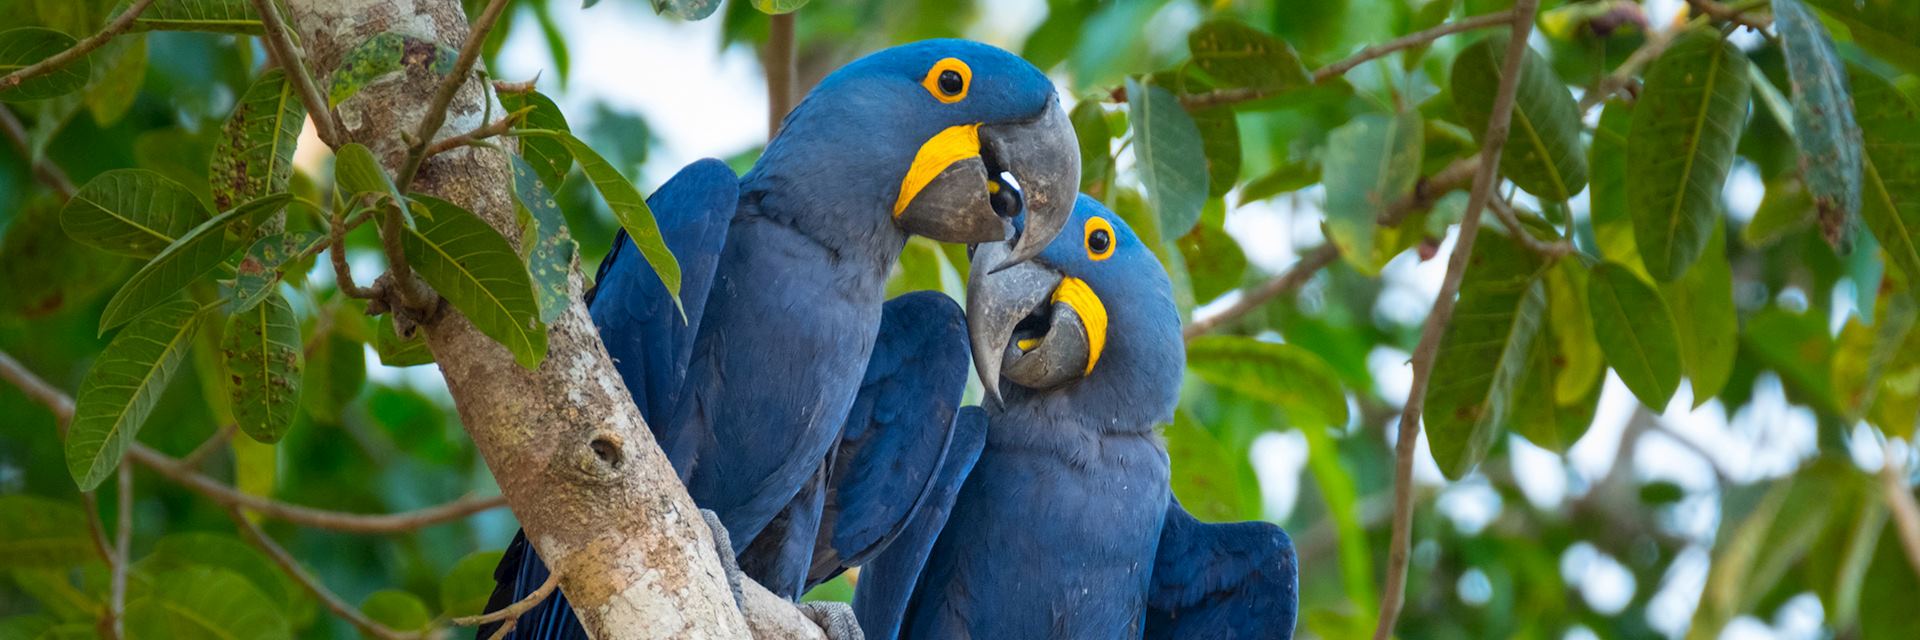 Hyacinth macaws, the Pantanal, Brazil